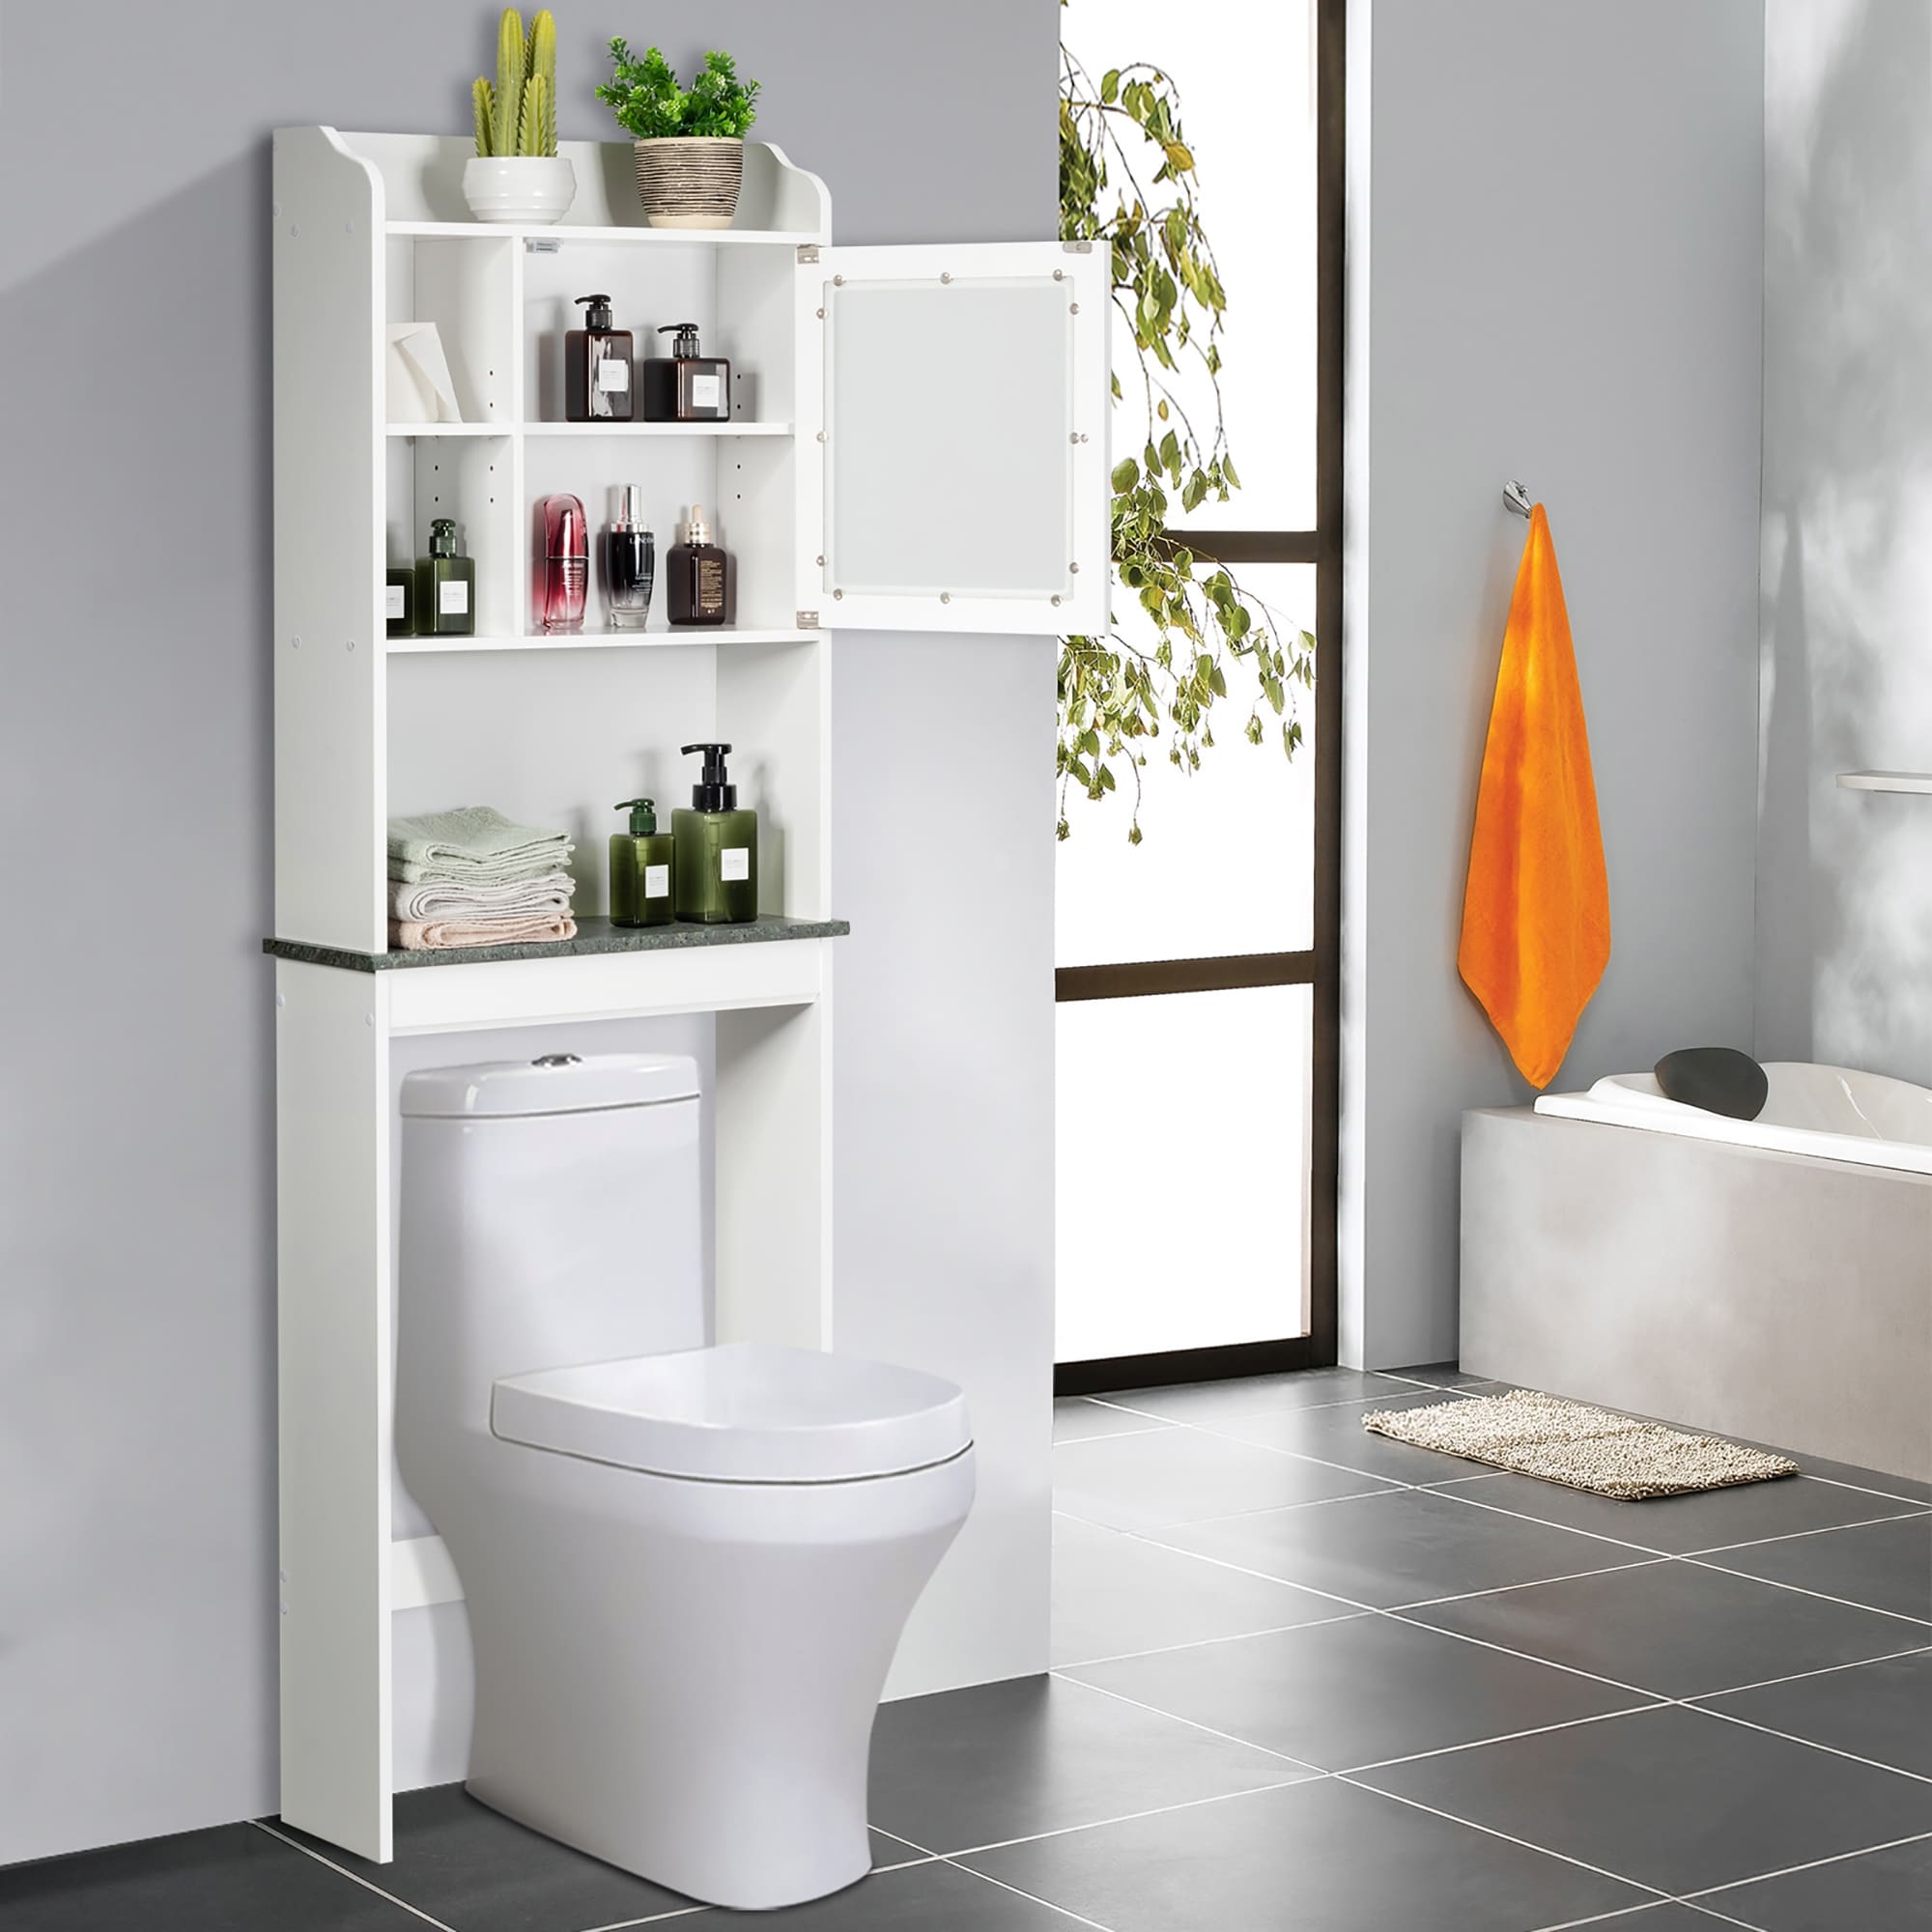 https://ak1.ostkcdn.com/images/products/is/images/direct/ff2cda2b6dd3d01f84c9dbef252547cd86256e0f/Over-The-Toilet-Shelf-Organizer-Bathroom-Space-Saver-Storage-Cabinet.jpg